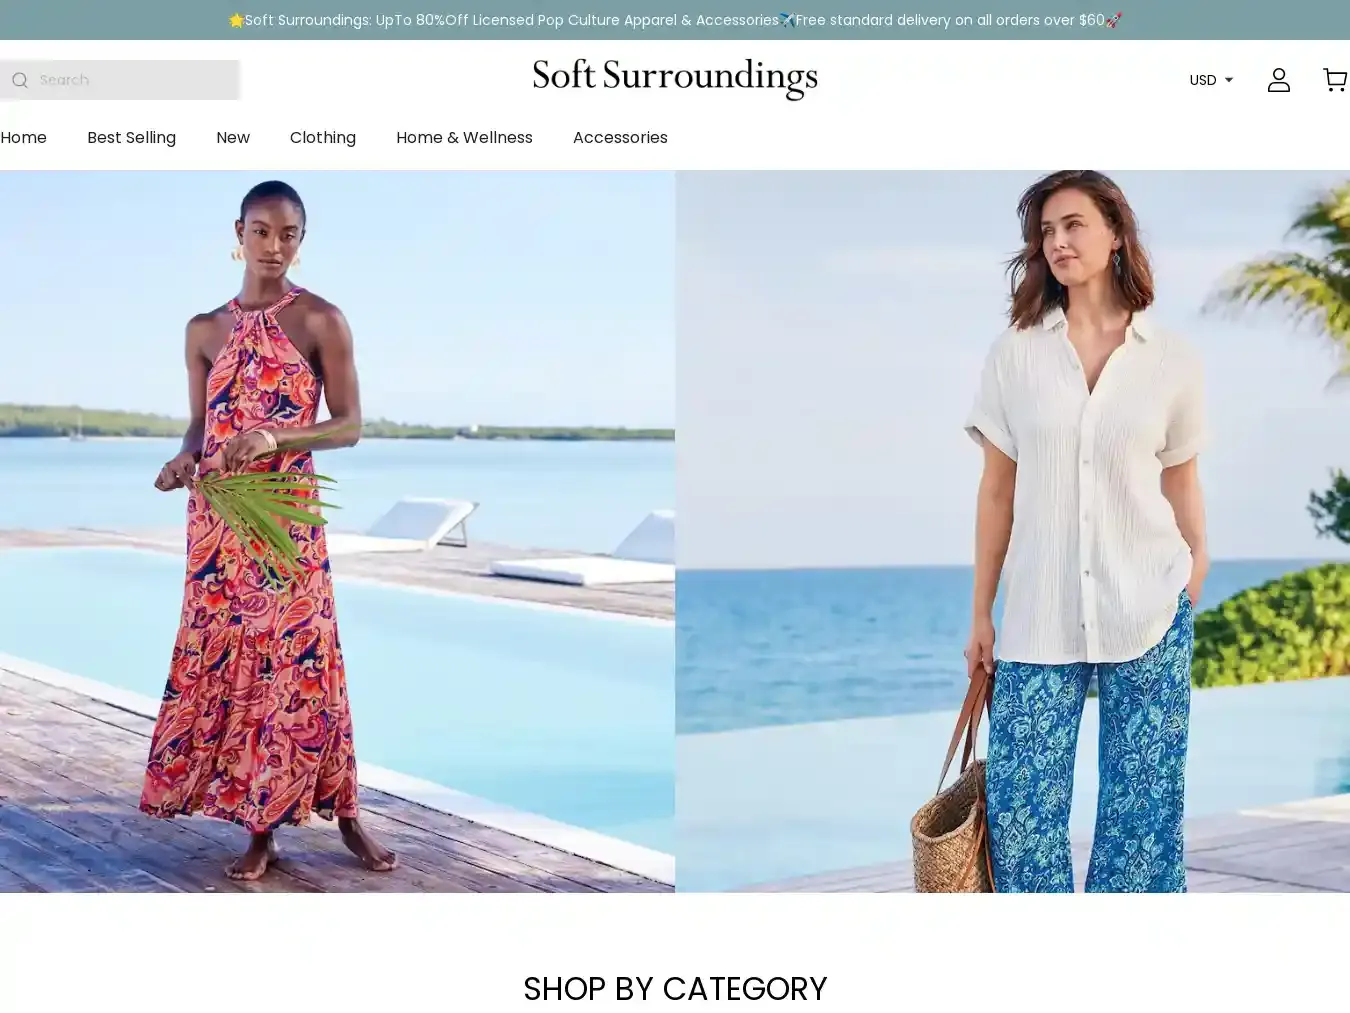 Softsurroundingsale.shop Fraudulent Non-Delivery website.